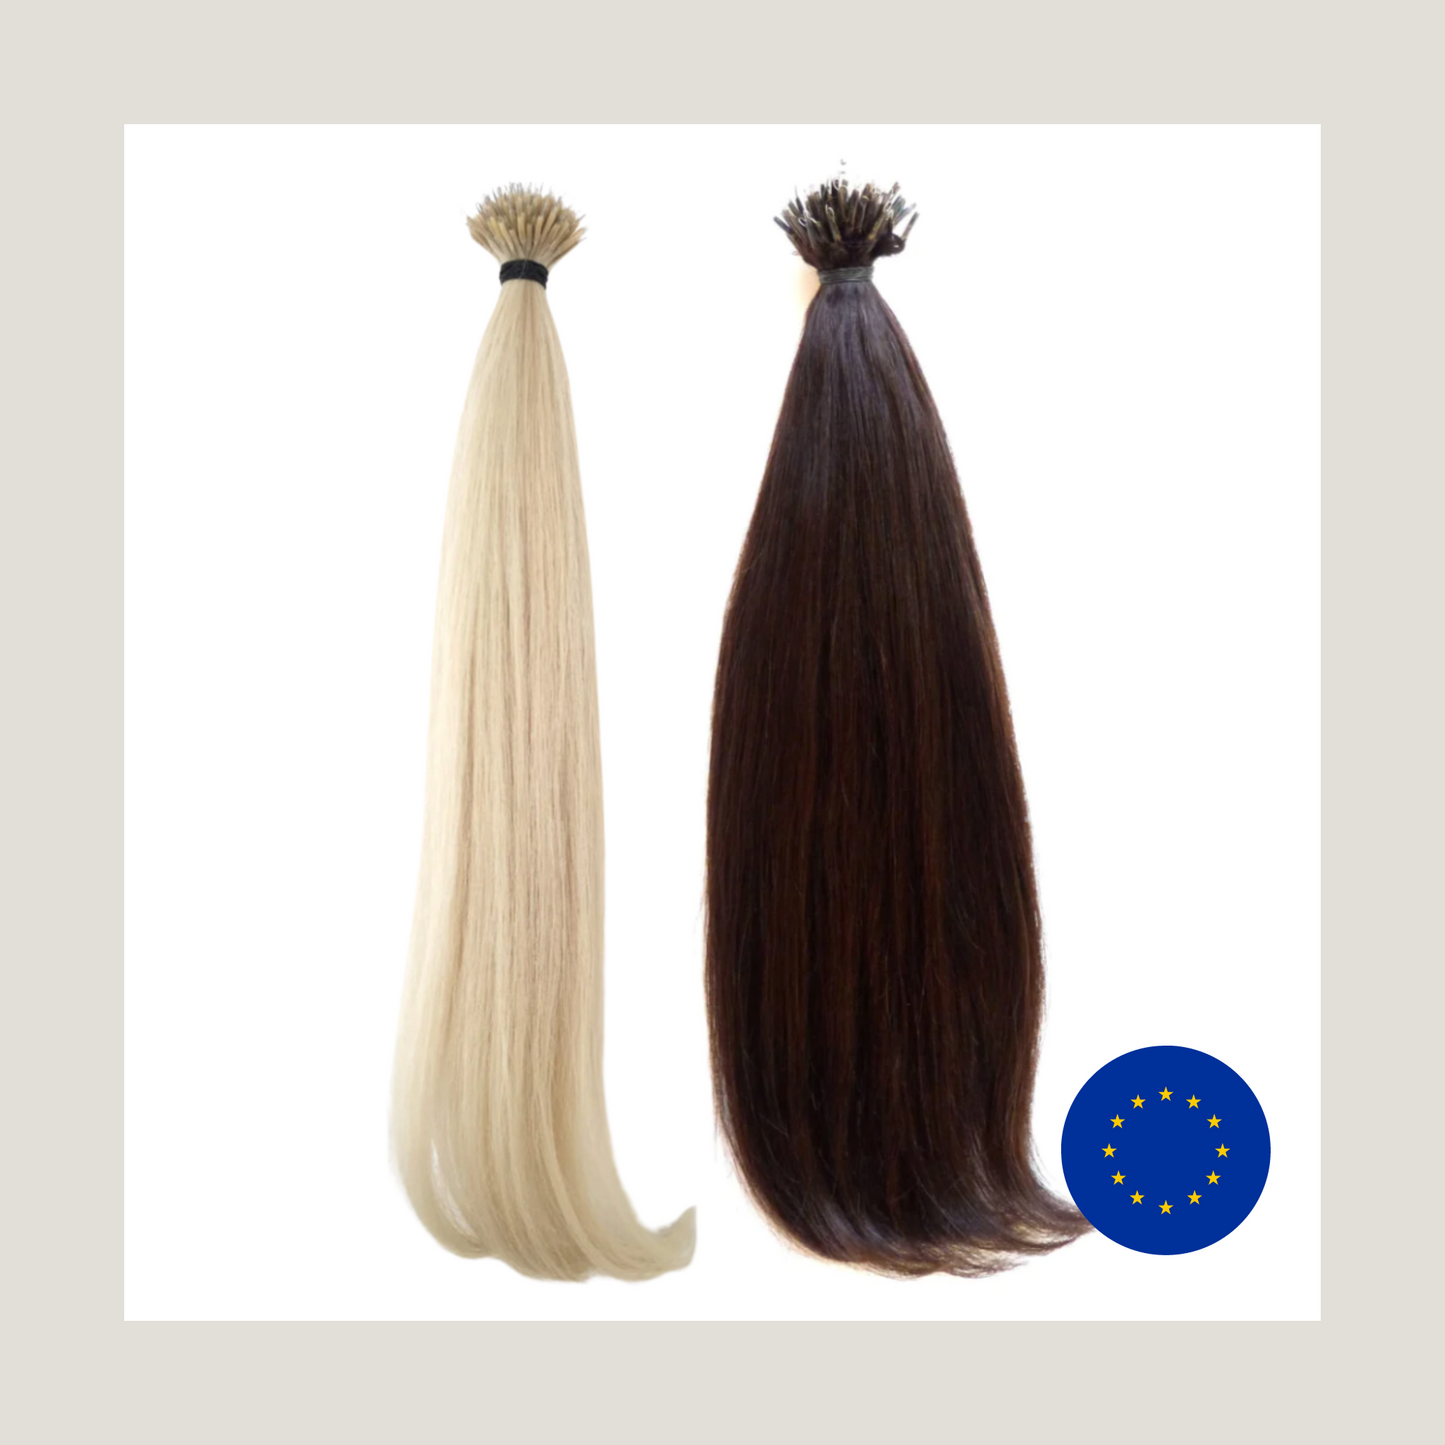 European Virgin Human Hair Extensions - Nano Ring Extensions